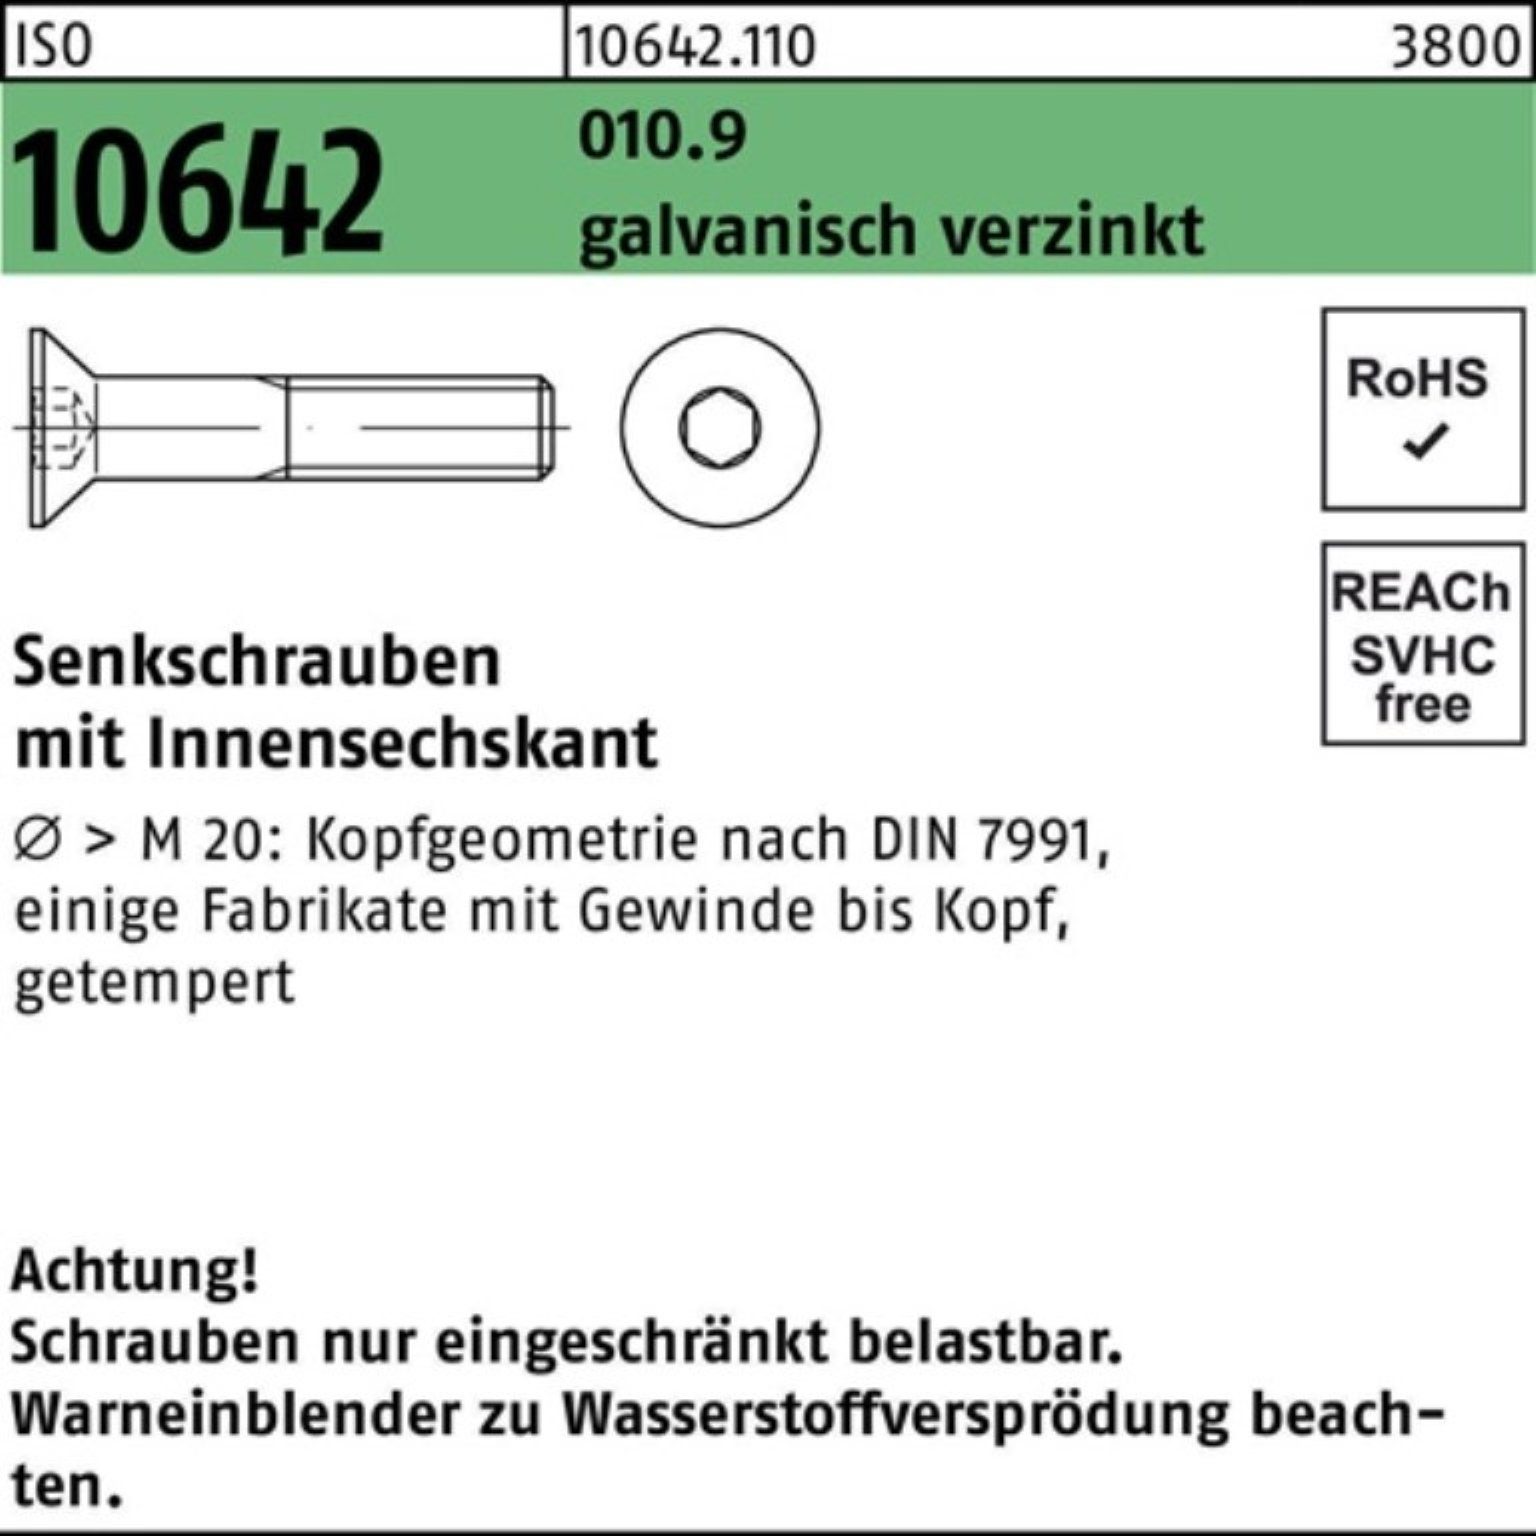 Reyher Senkschraube 500er Pack Senkschraube M6x 010.9 ISO galv.verz. 10642 Innen-6kt 20 50